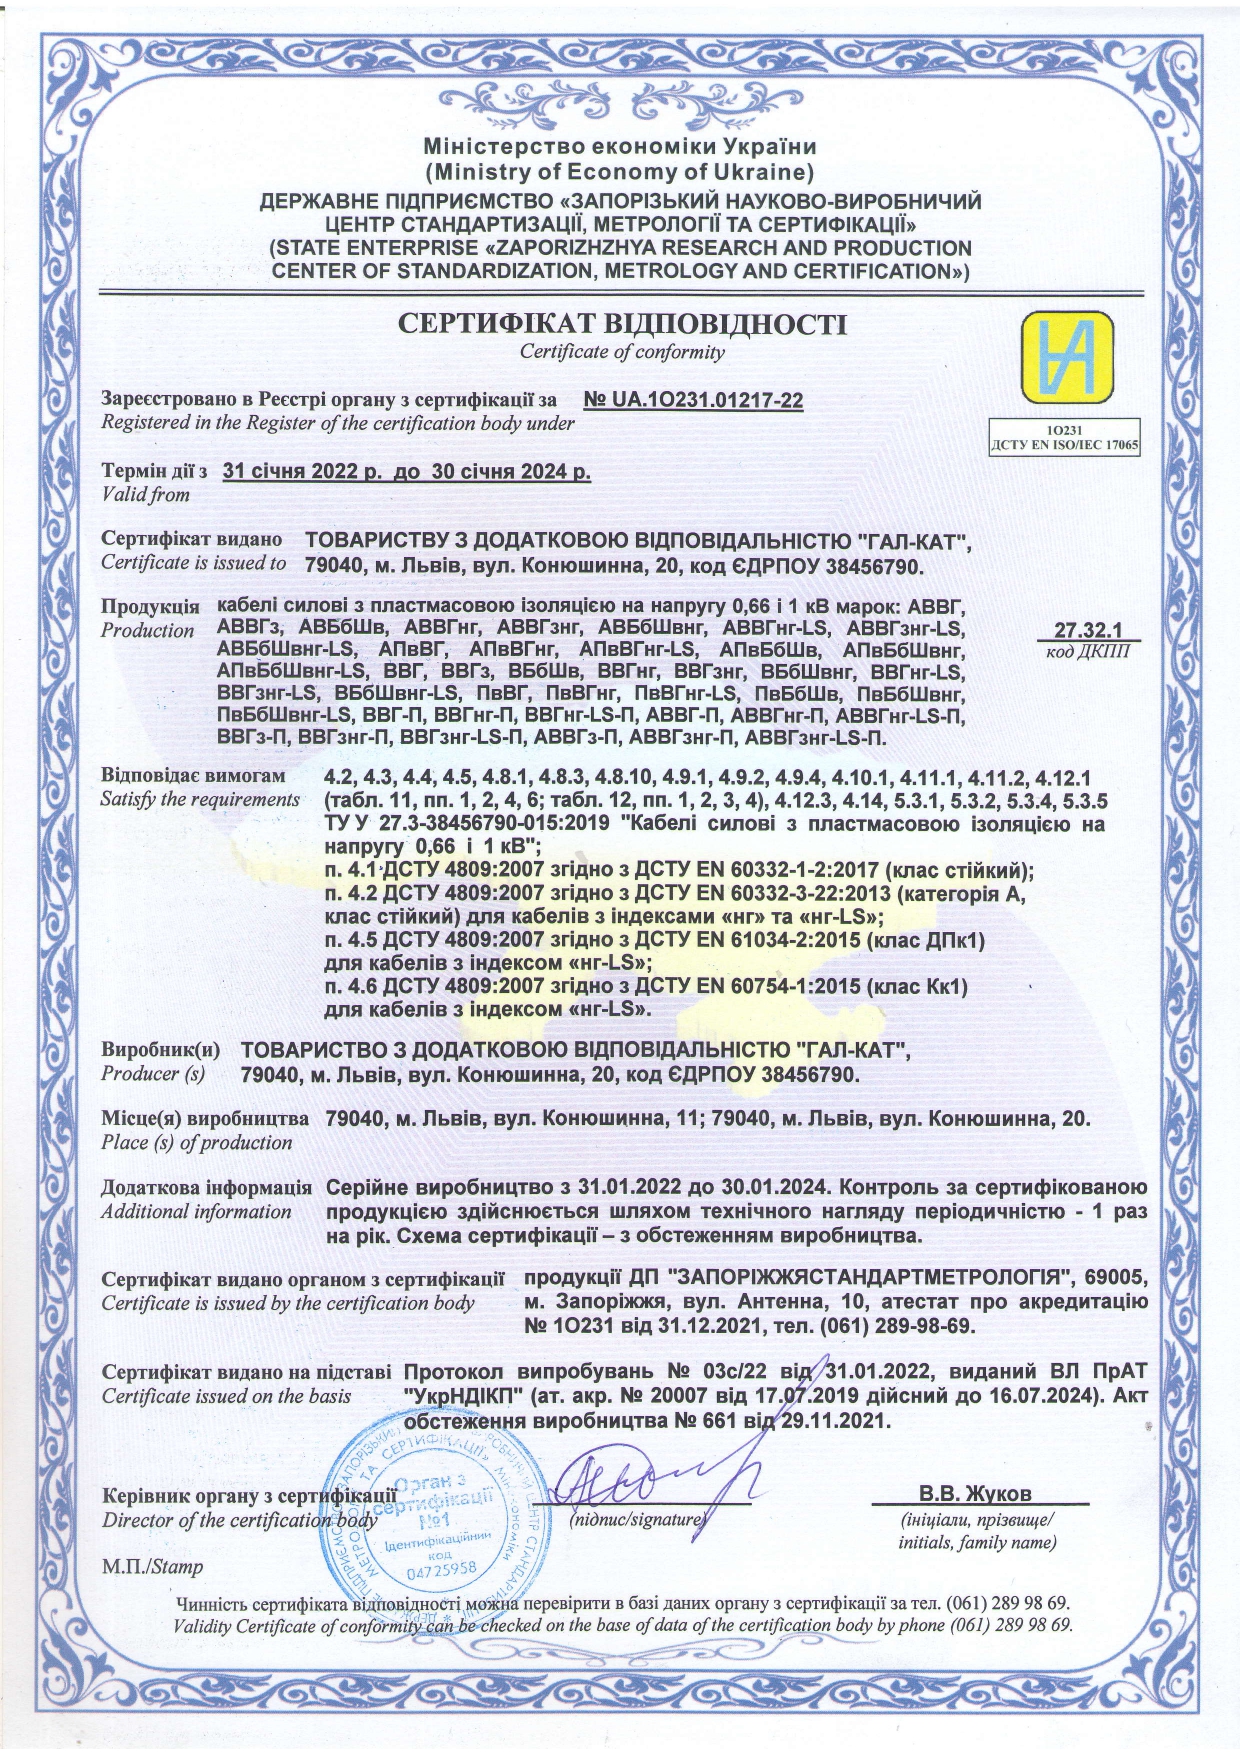 Сертификат ВВГ, ВВГнг, ВВГнгд «GAL-KAT»